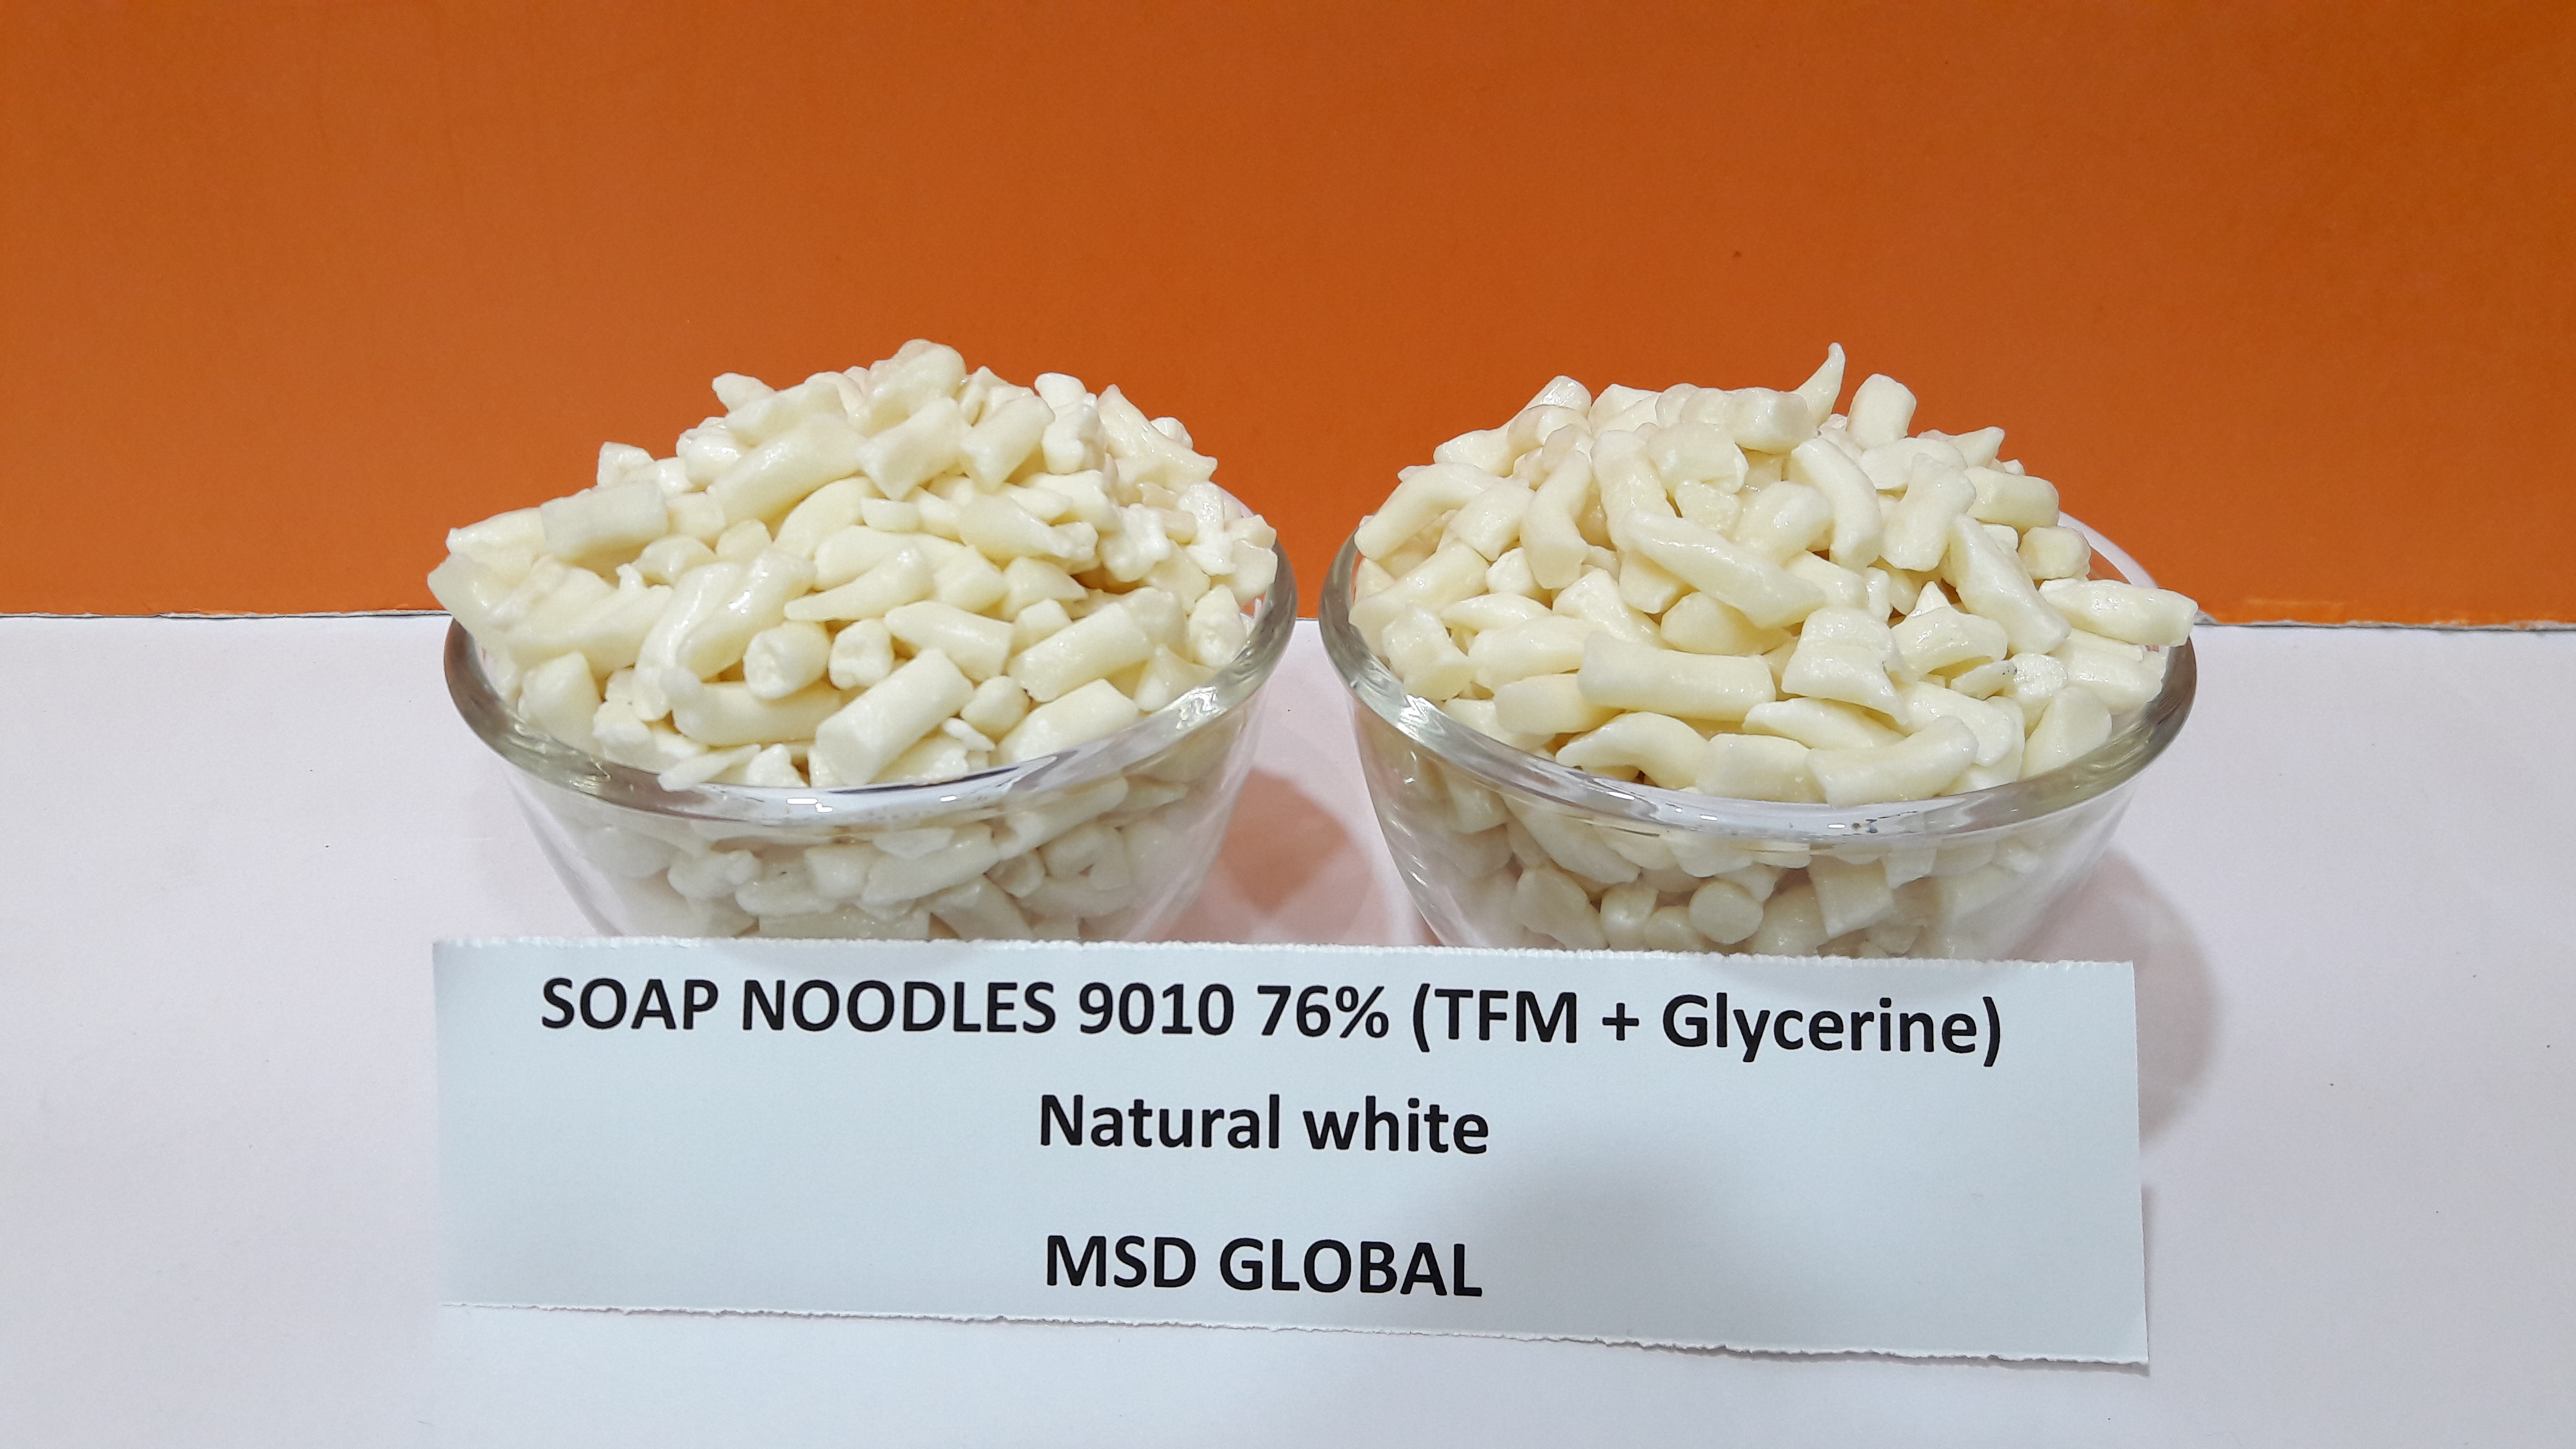 SOAP NOODLES 9010 76% Natural white